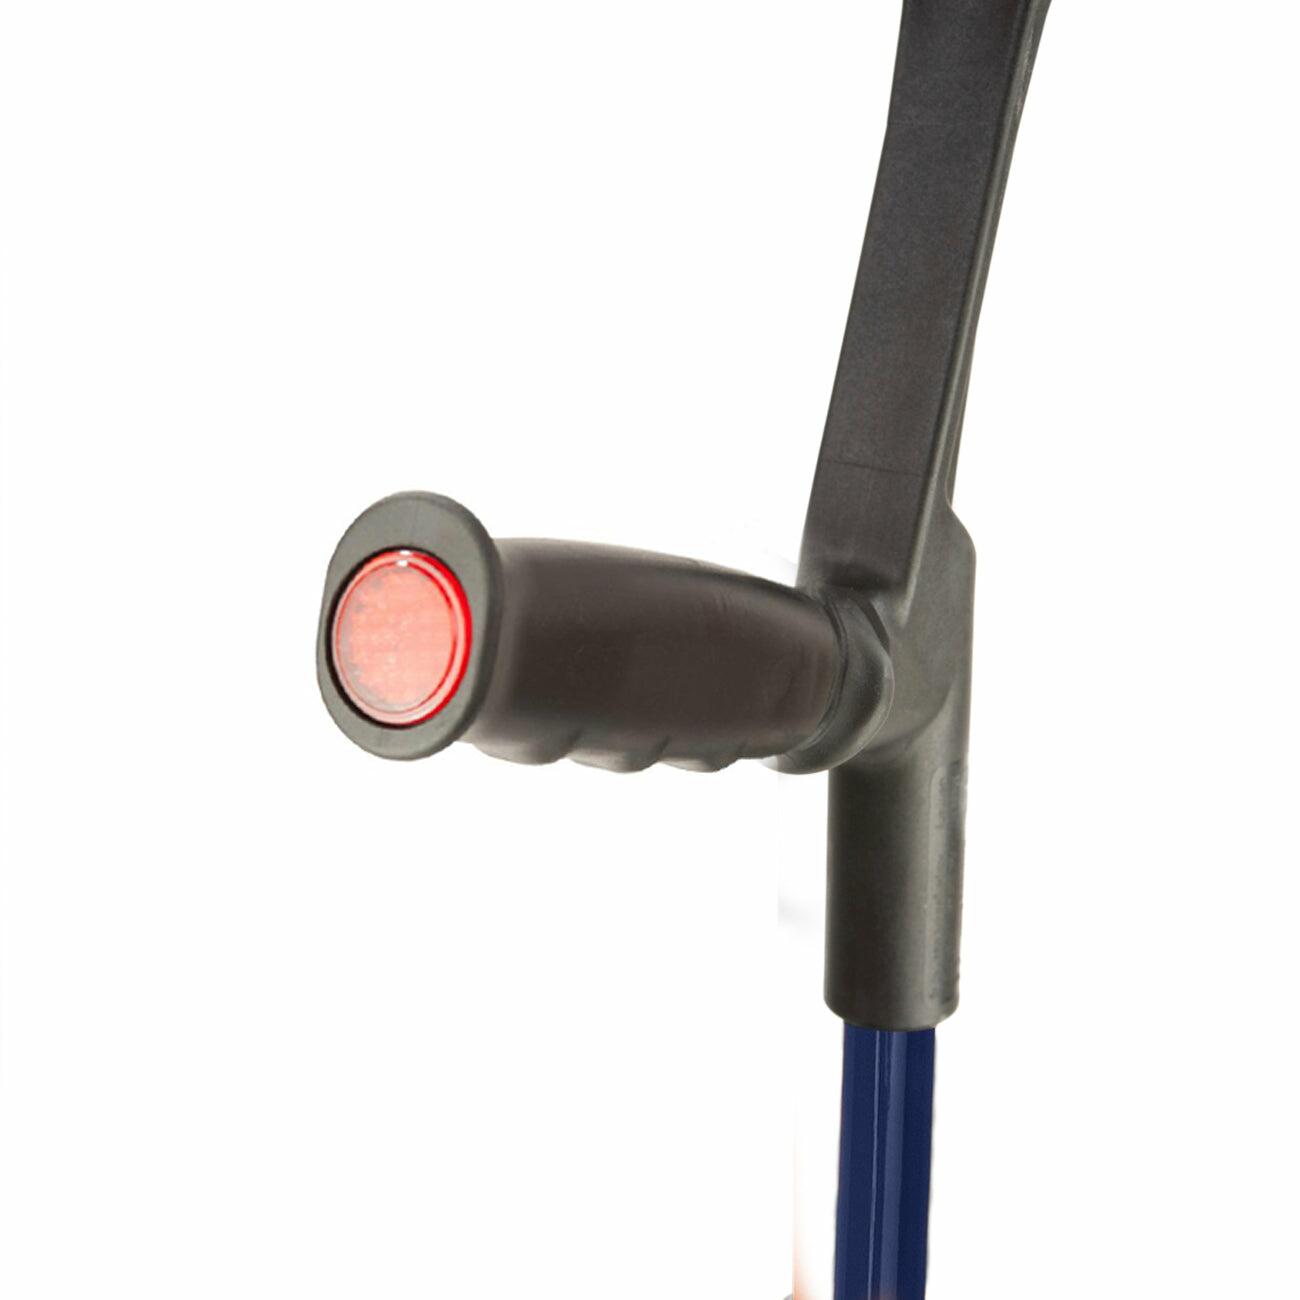 Soft grip handle of the Flexyfoot Soft Grip Open Cuff Crutch